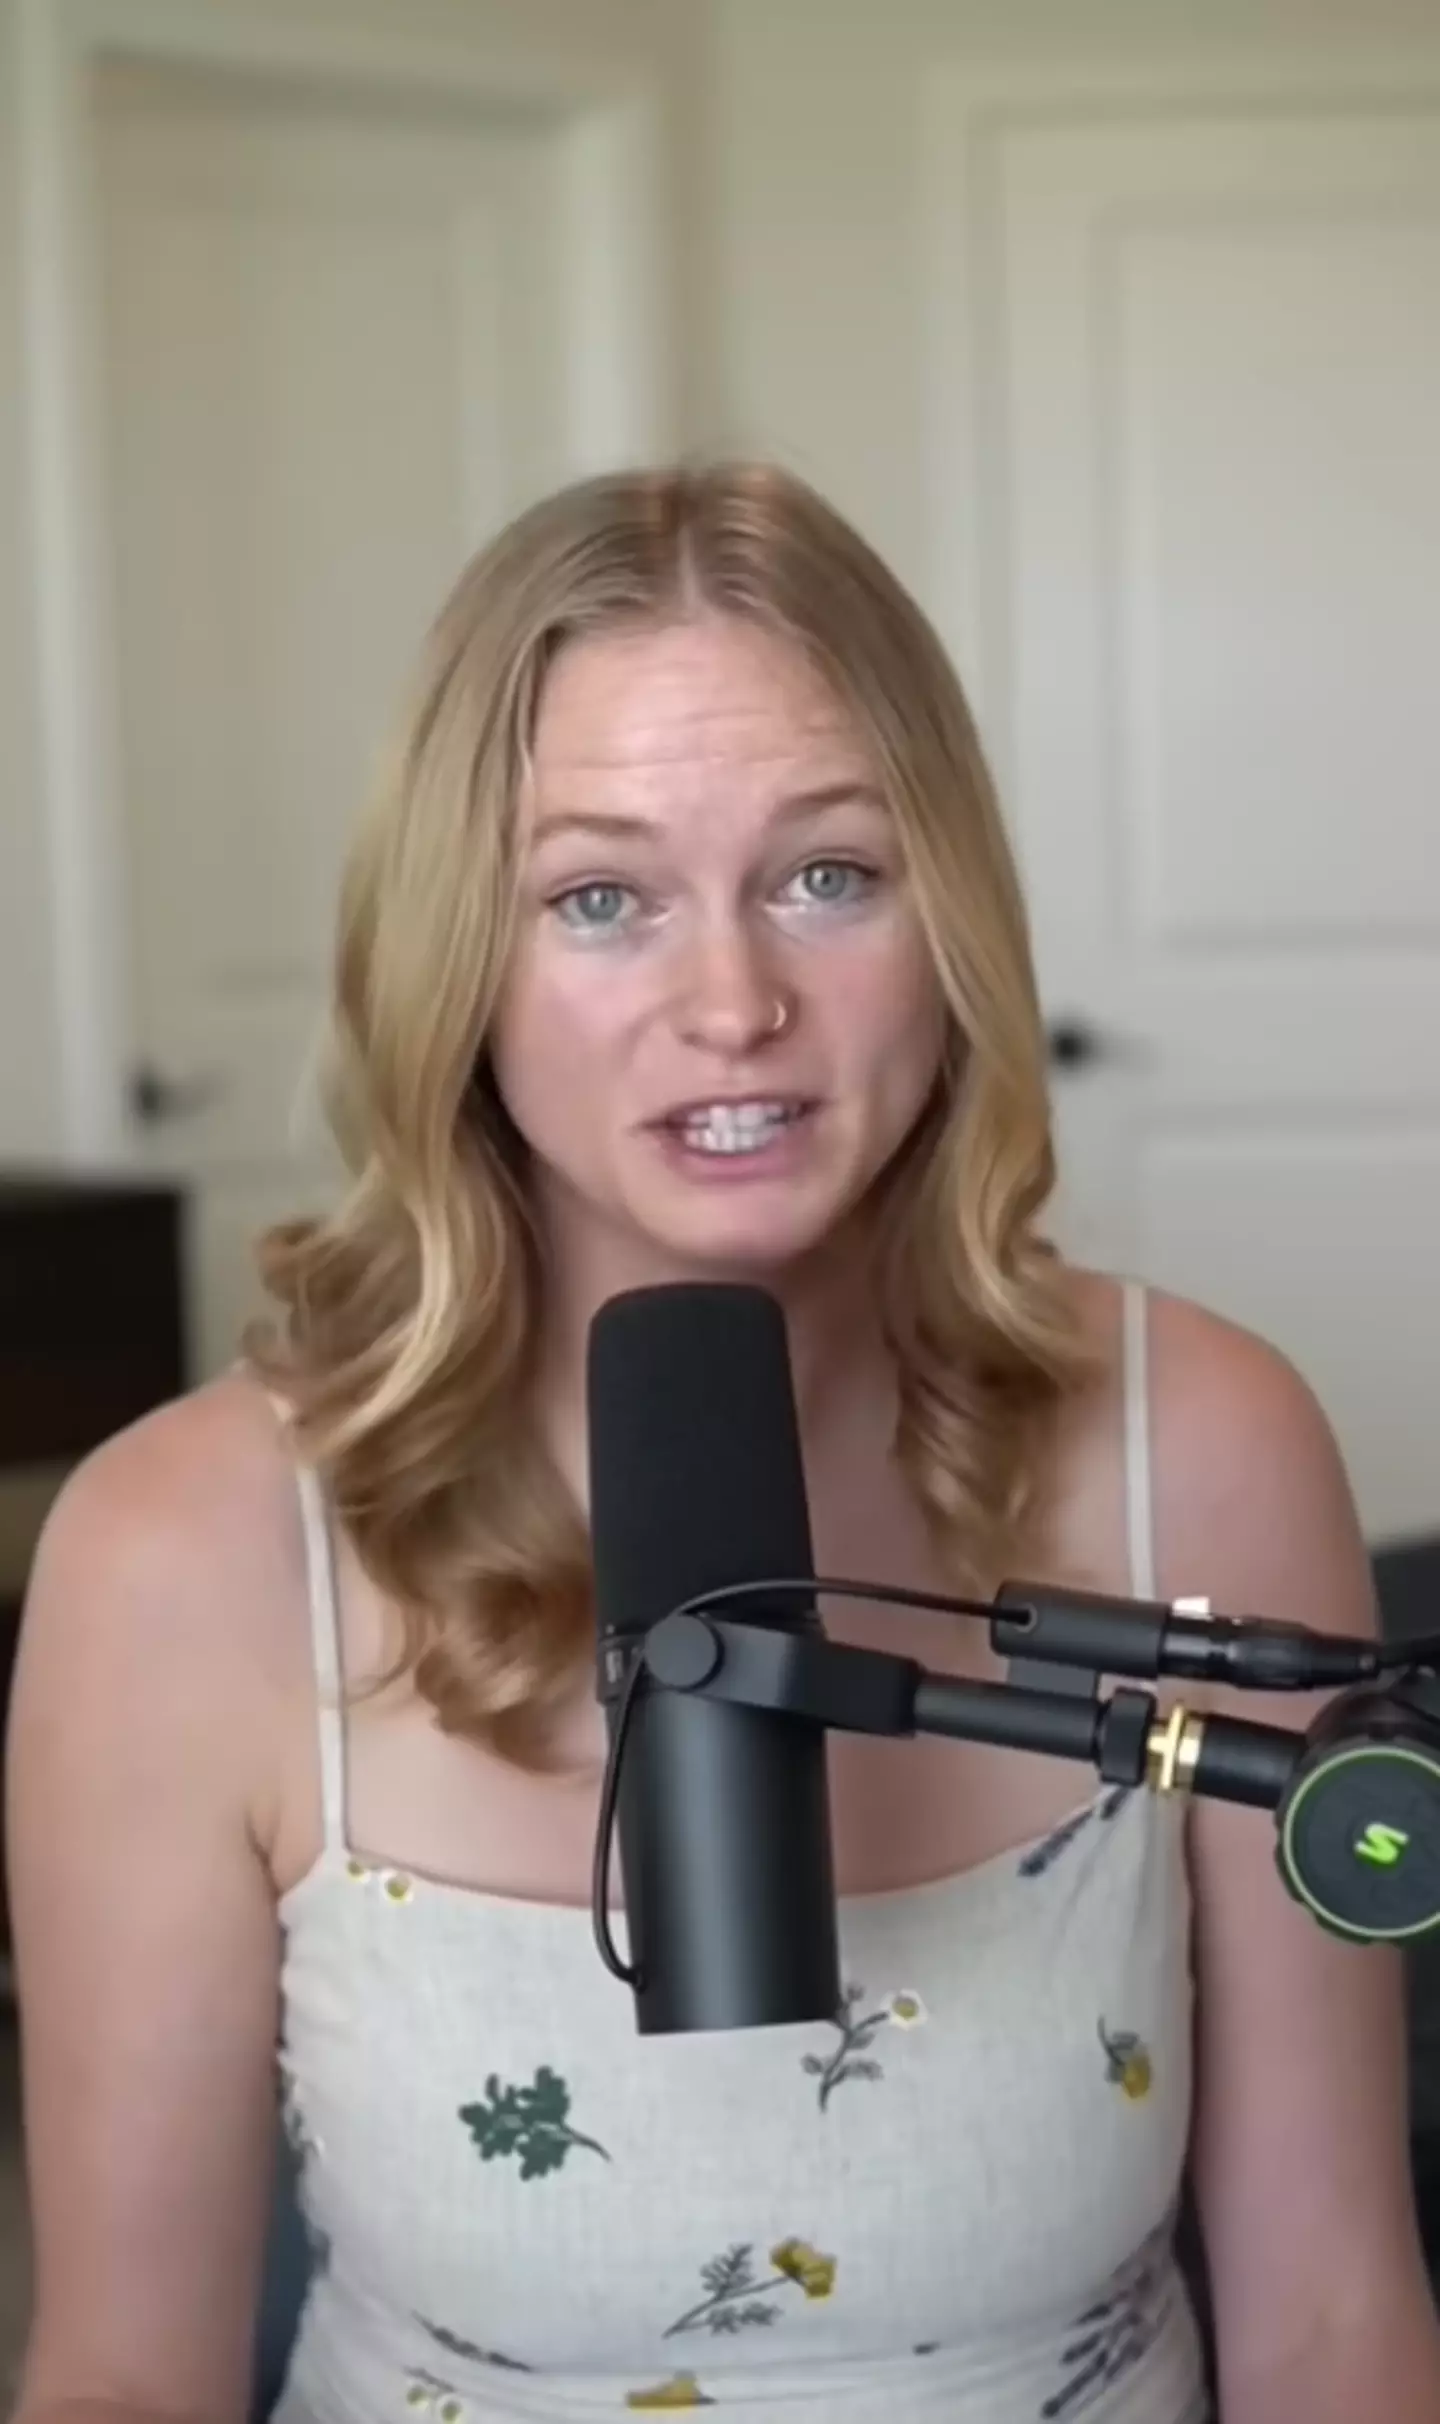 Alyssa explained why Mormons 'look alike'. (YouTube/Alyssa Grenfell)